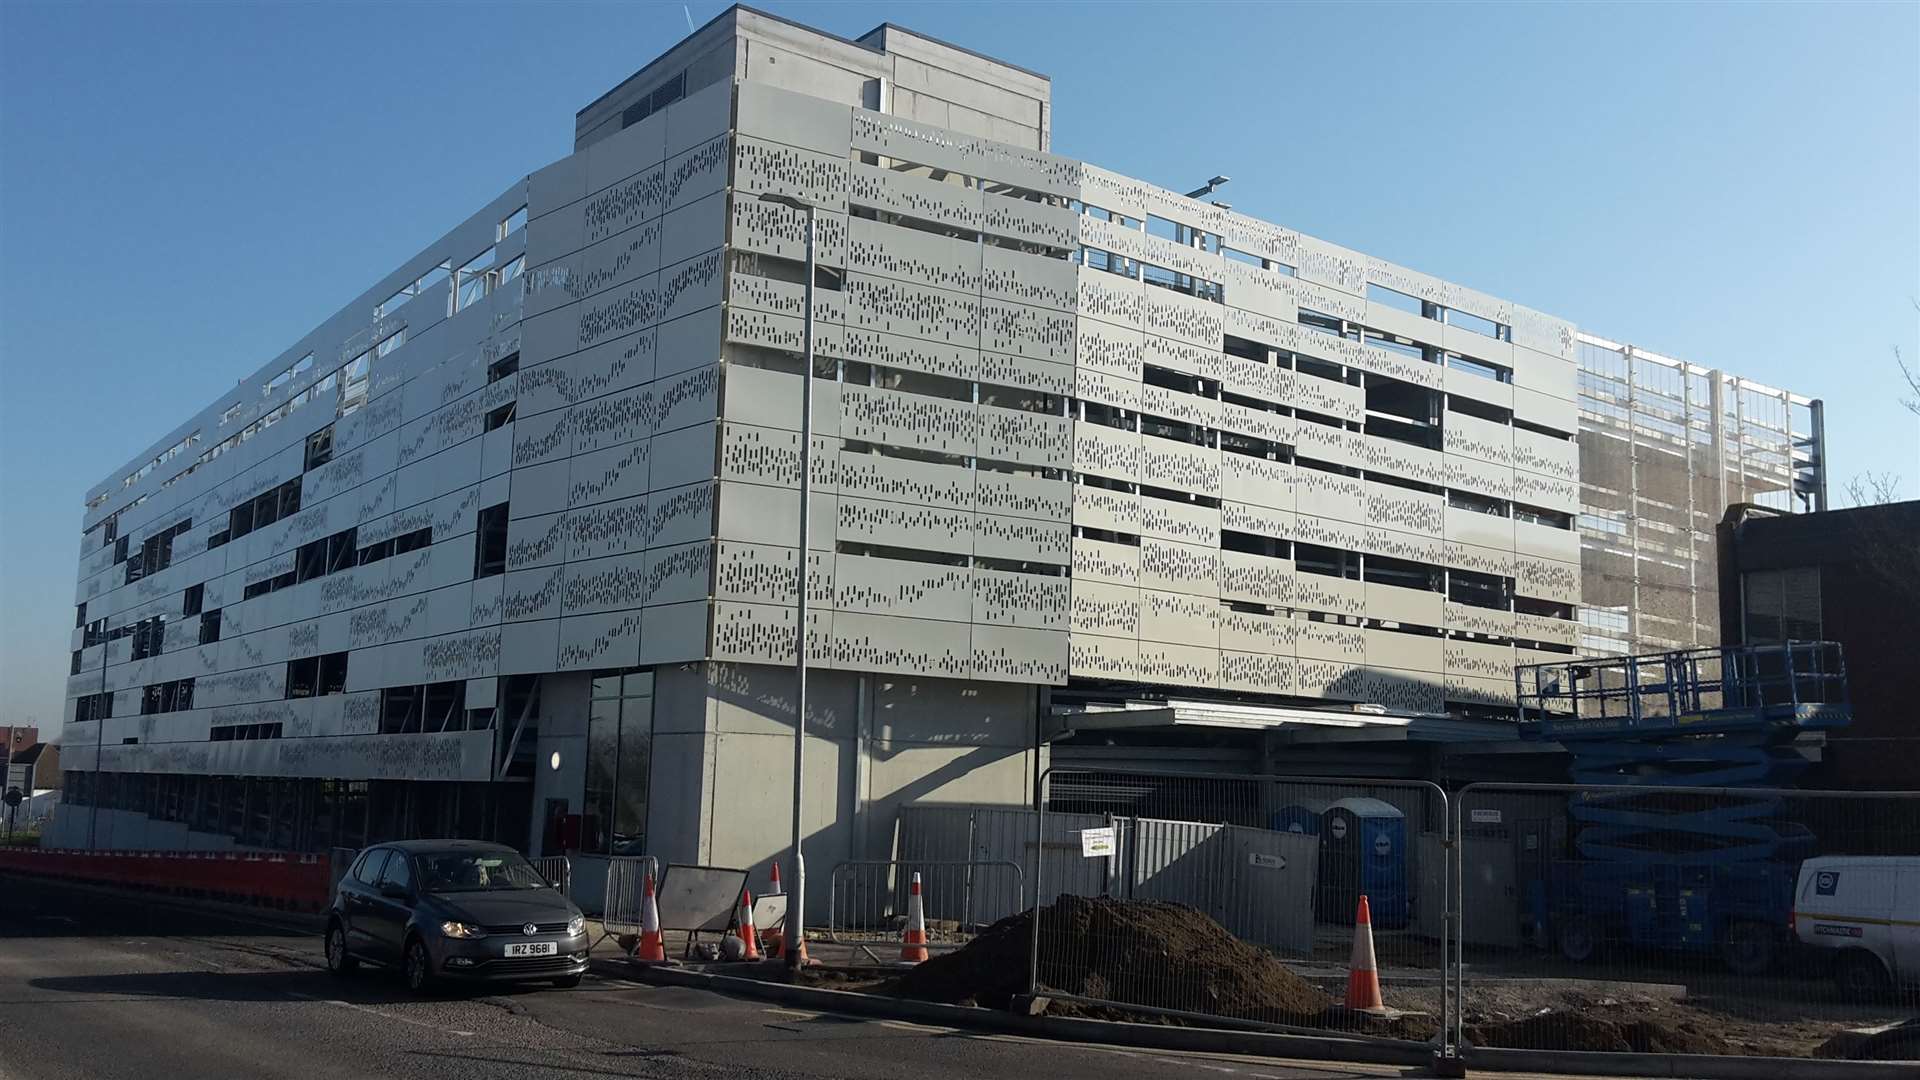 Sittingbourne's new multi-storey car park is now open